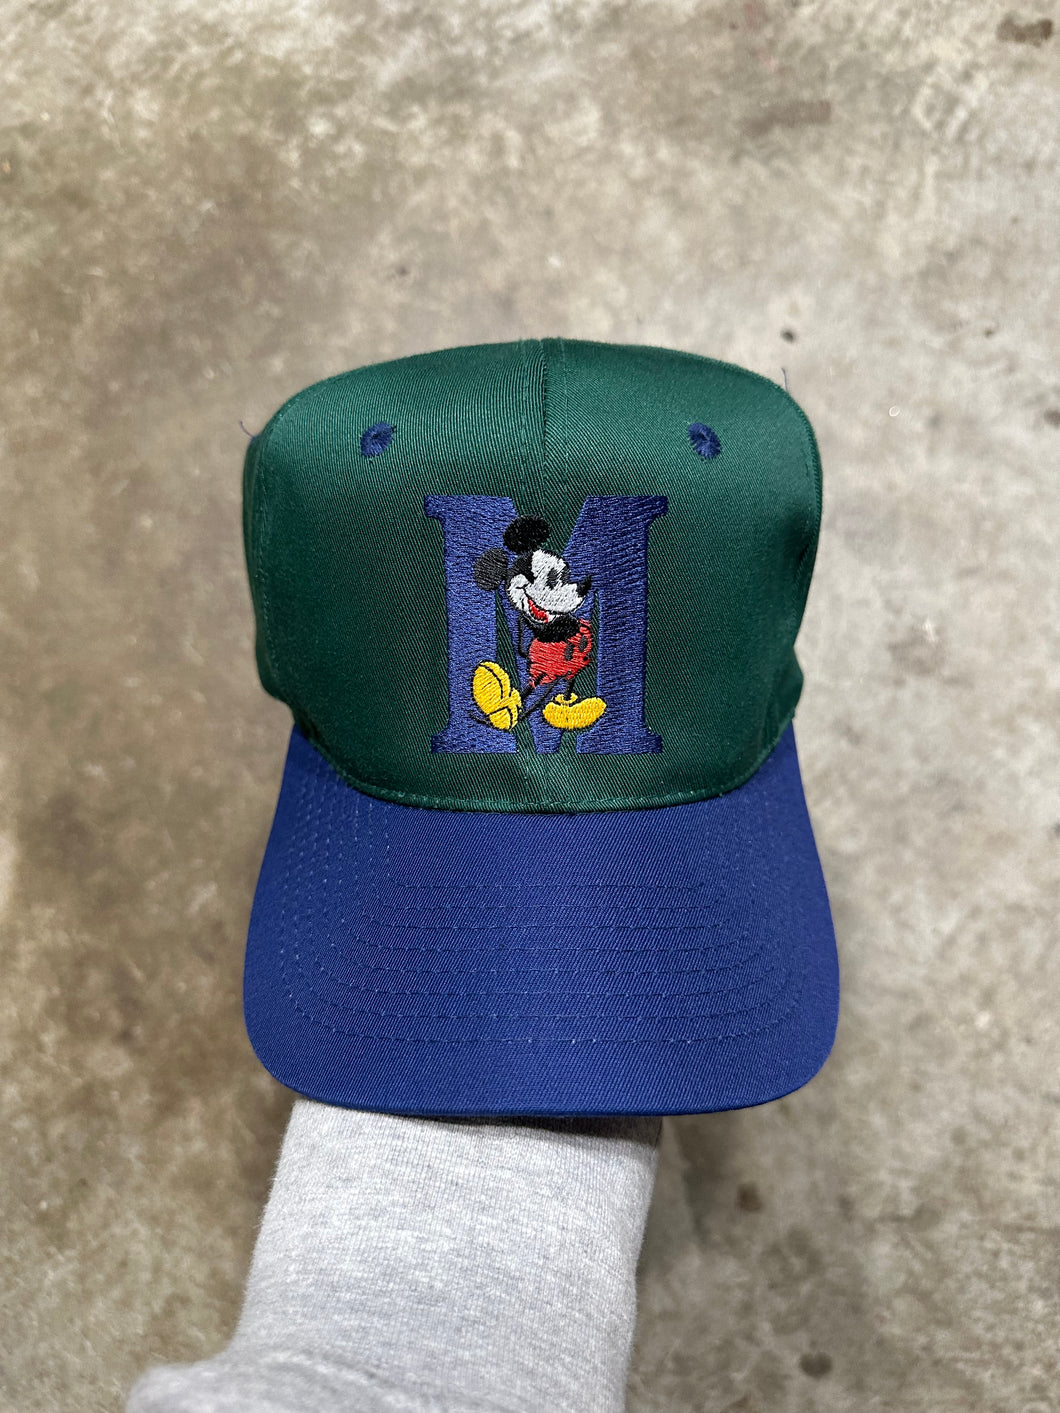 Vintage Mickey Mouse Snapback Hat